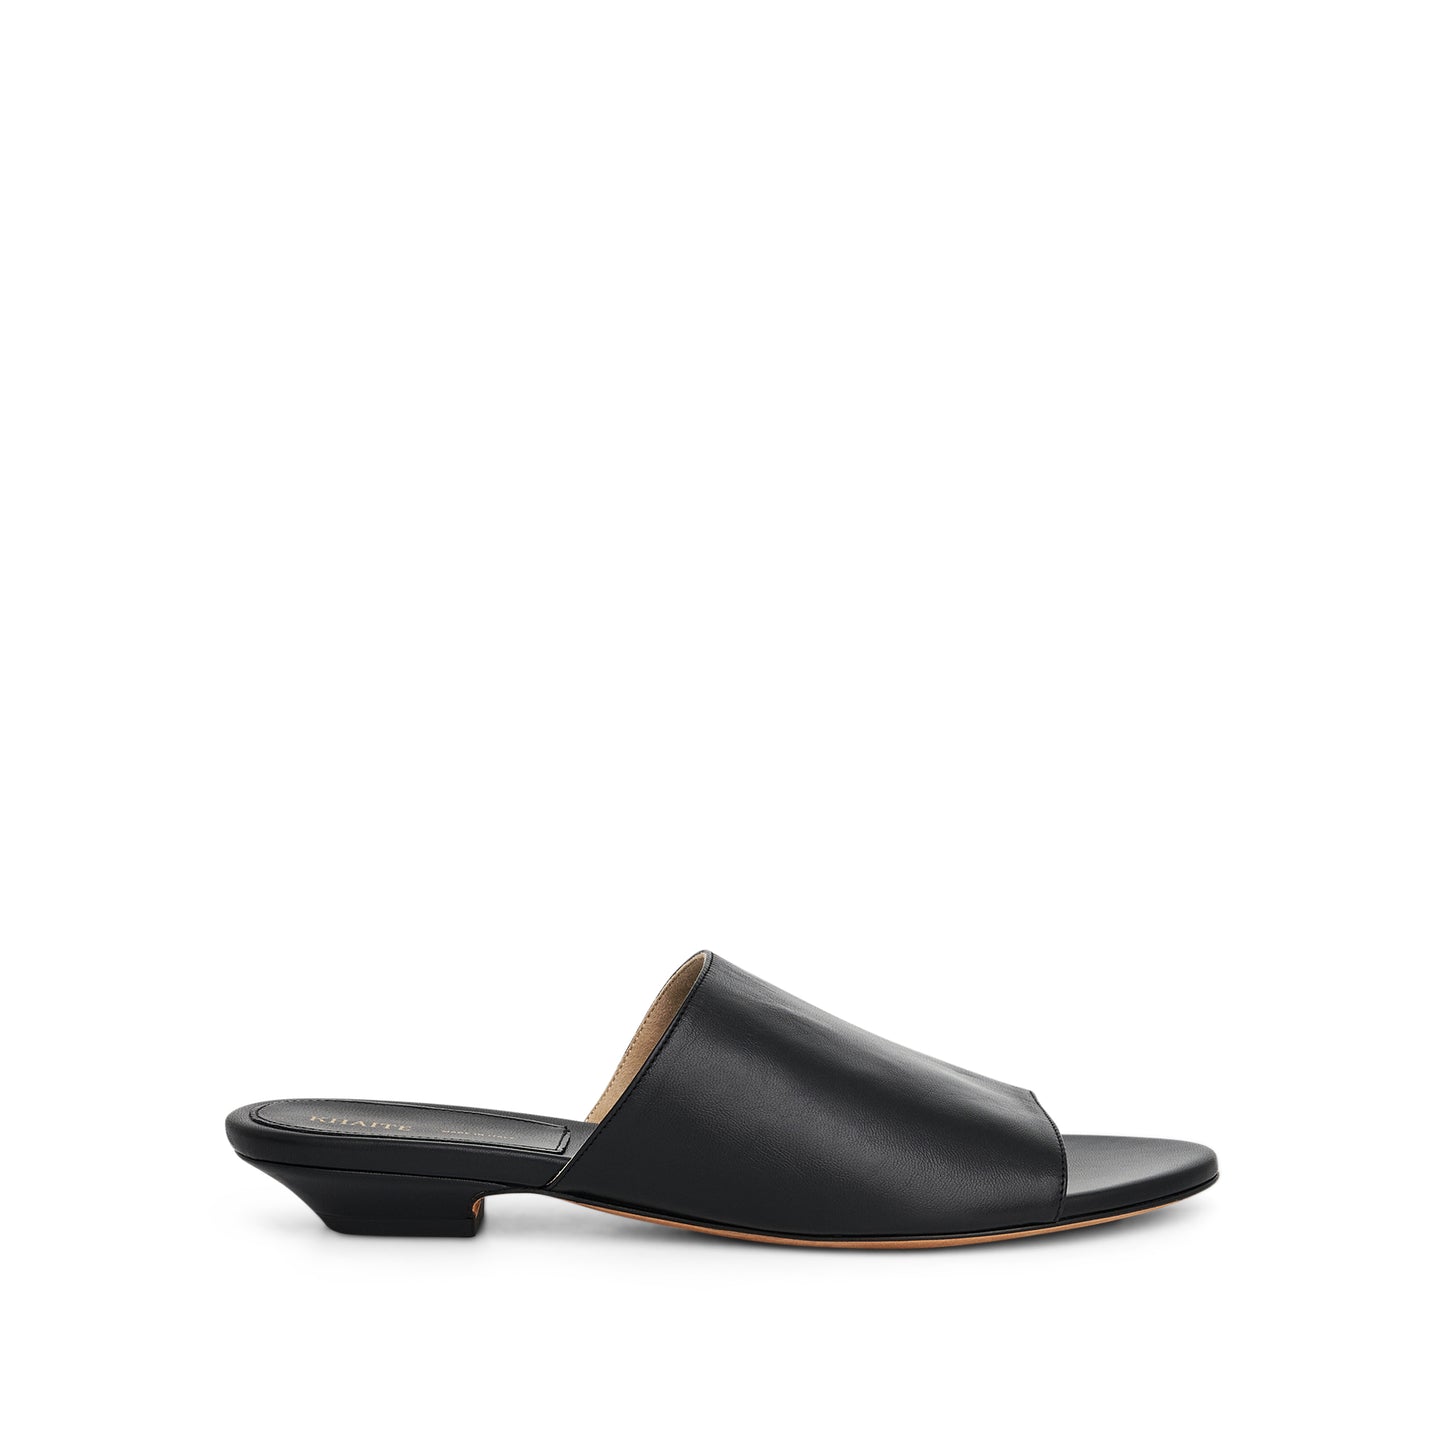 Marion Slide Flat Sandal in Black